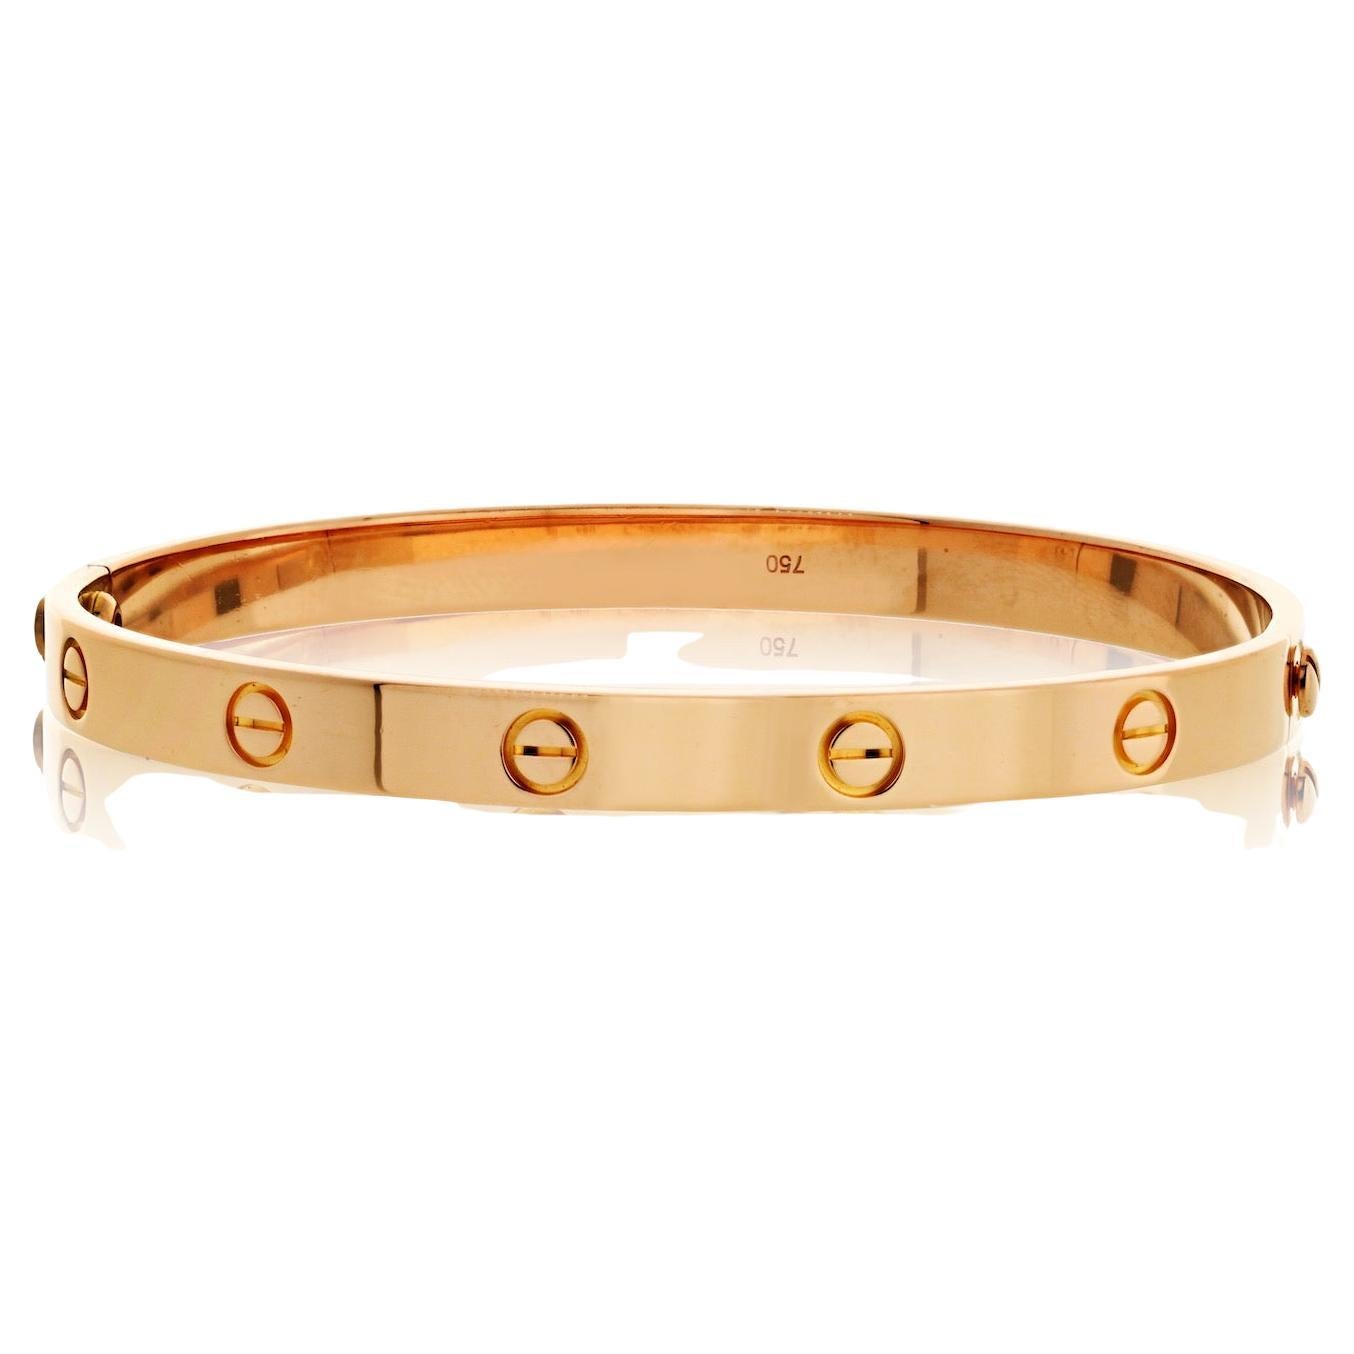 Cartier Love Bracelet Size 20 in 18K Rose Gold